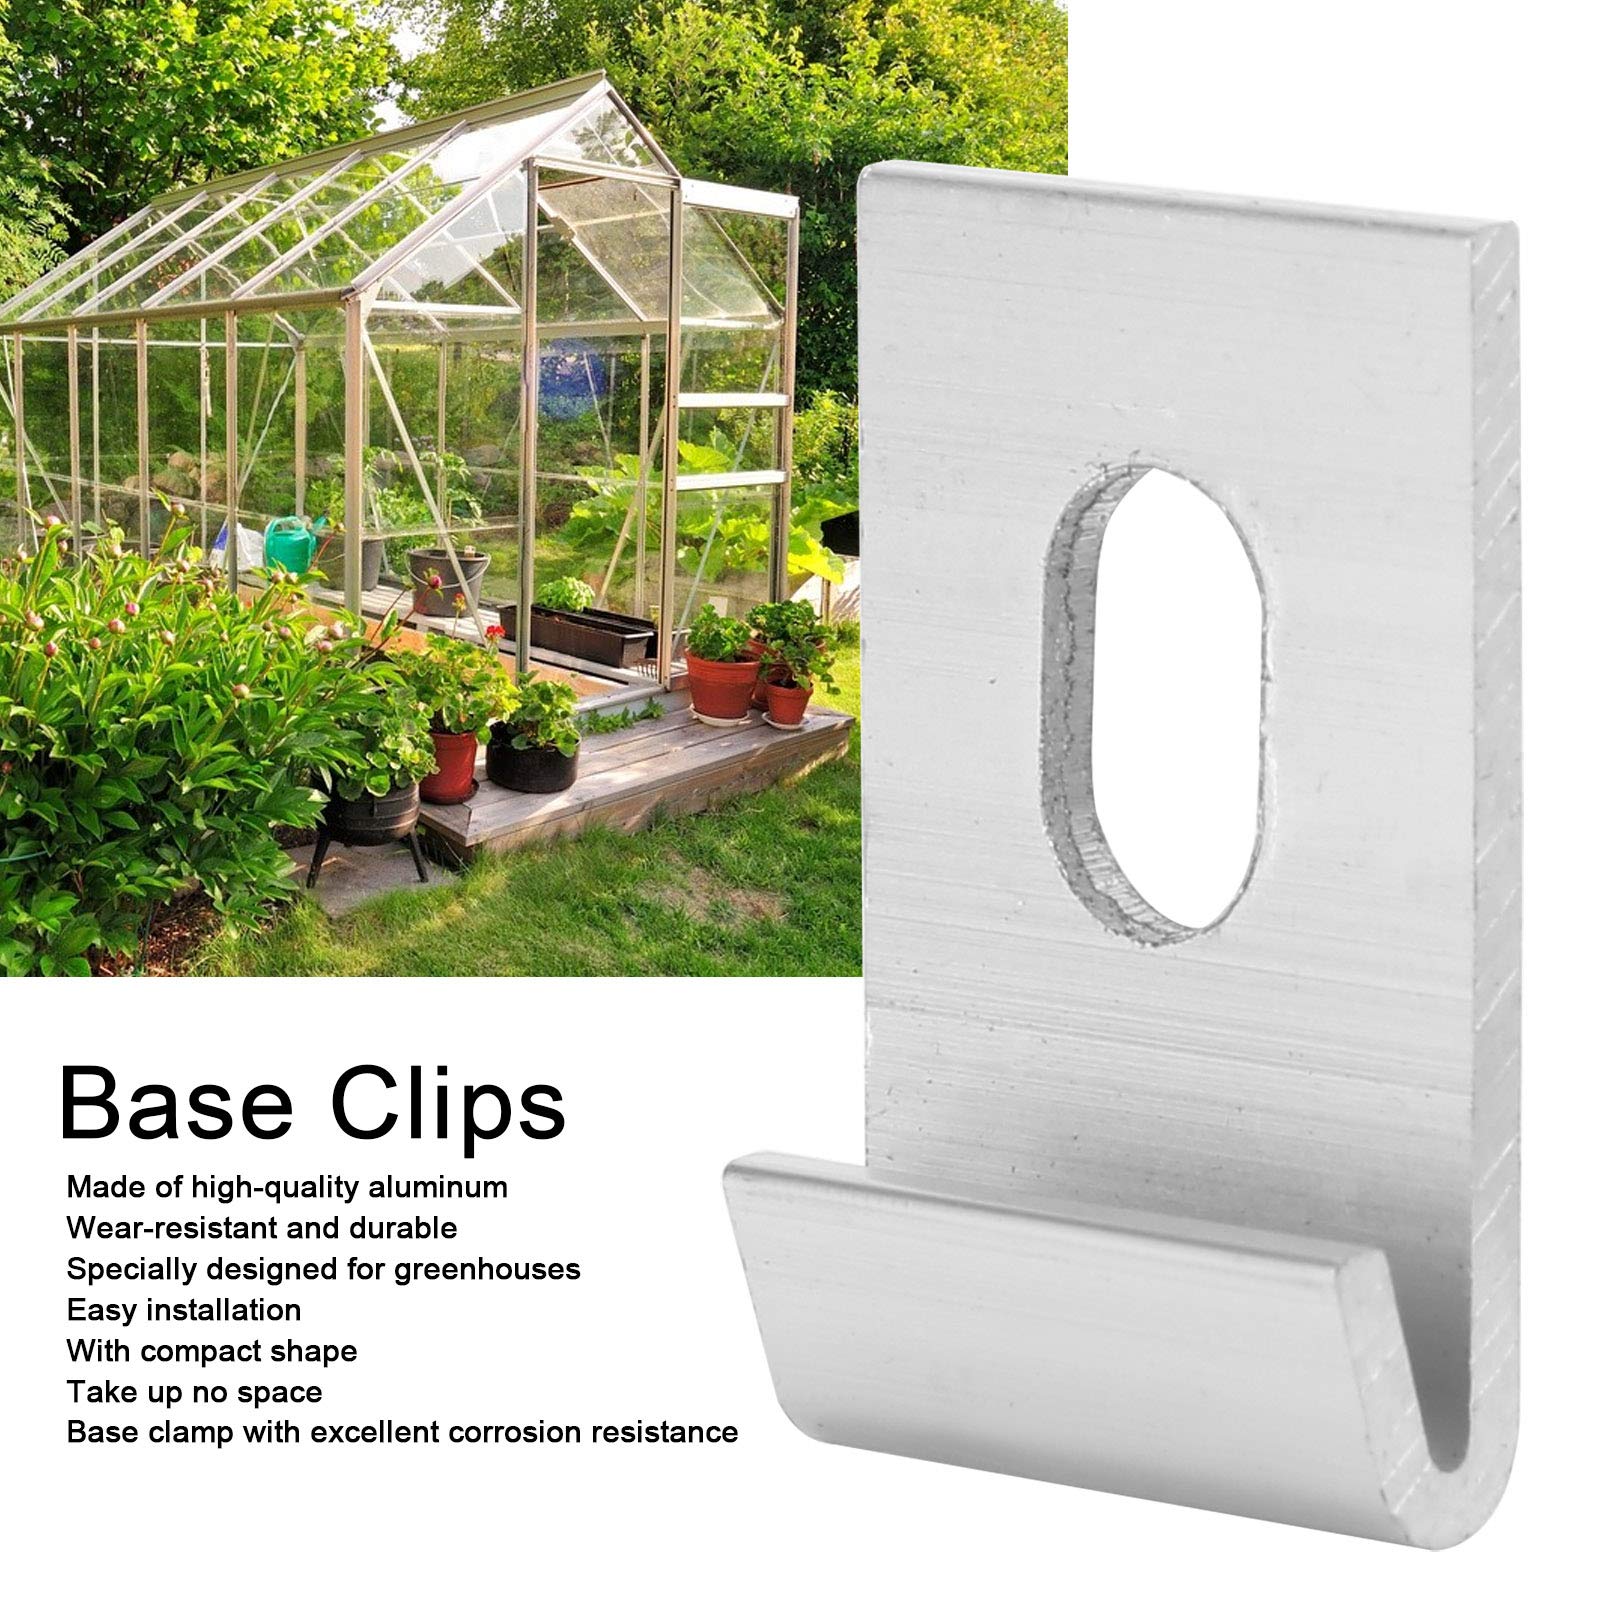 10Pcs Base Clips Hook Fixings Attaches Aluminium Greenhouses Fixture Set WearResistant Base Clips(Silver)